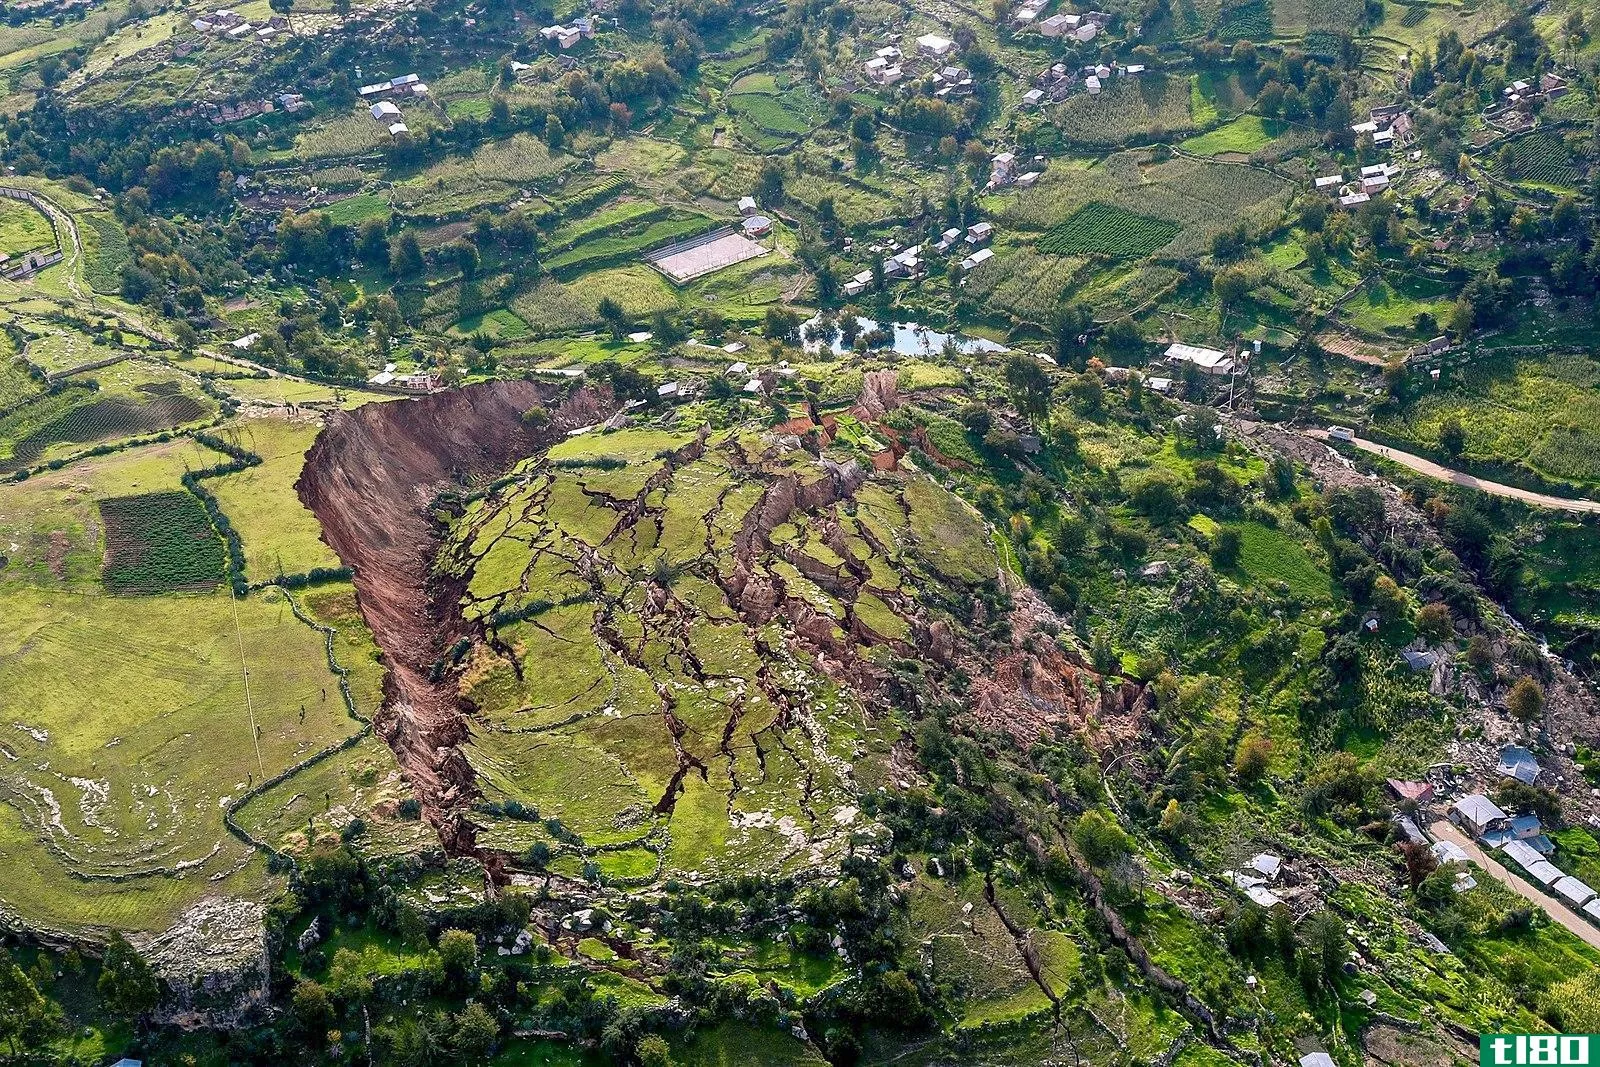 山崩(landslide)和泥石流(mudslide)的区别